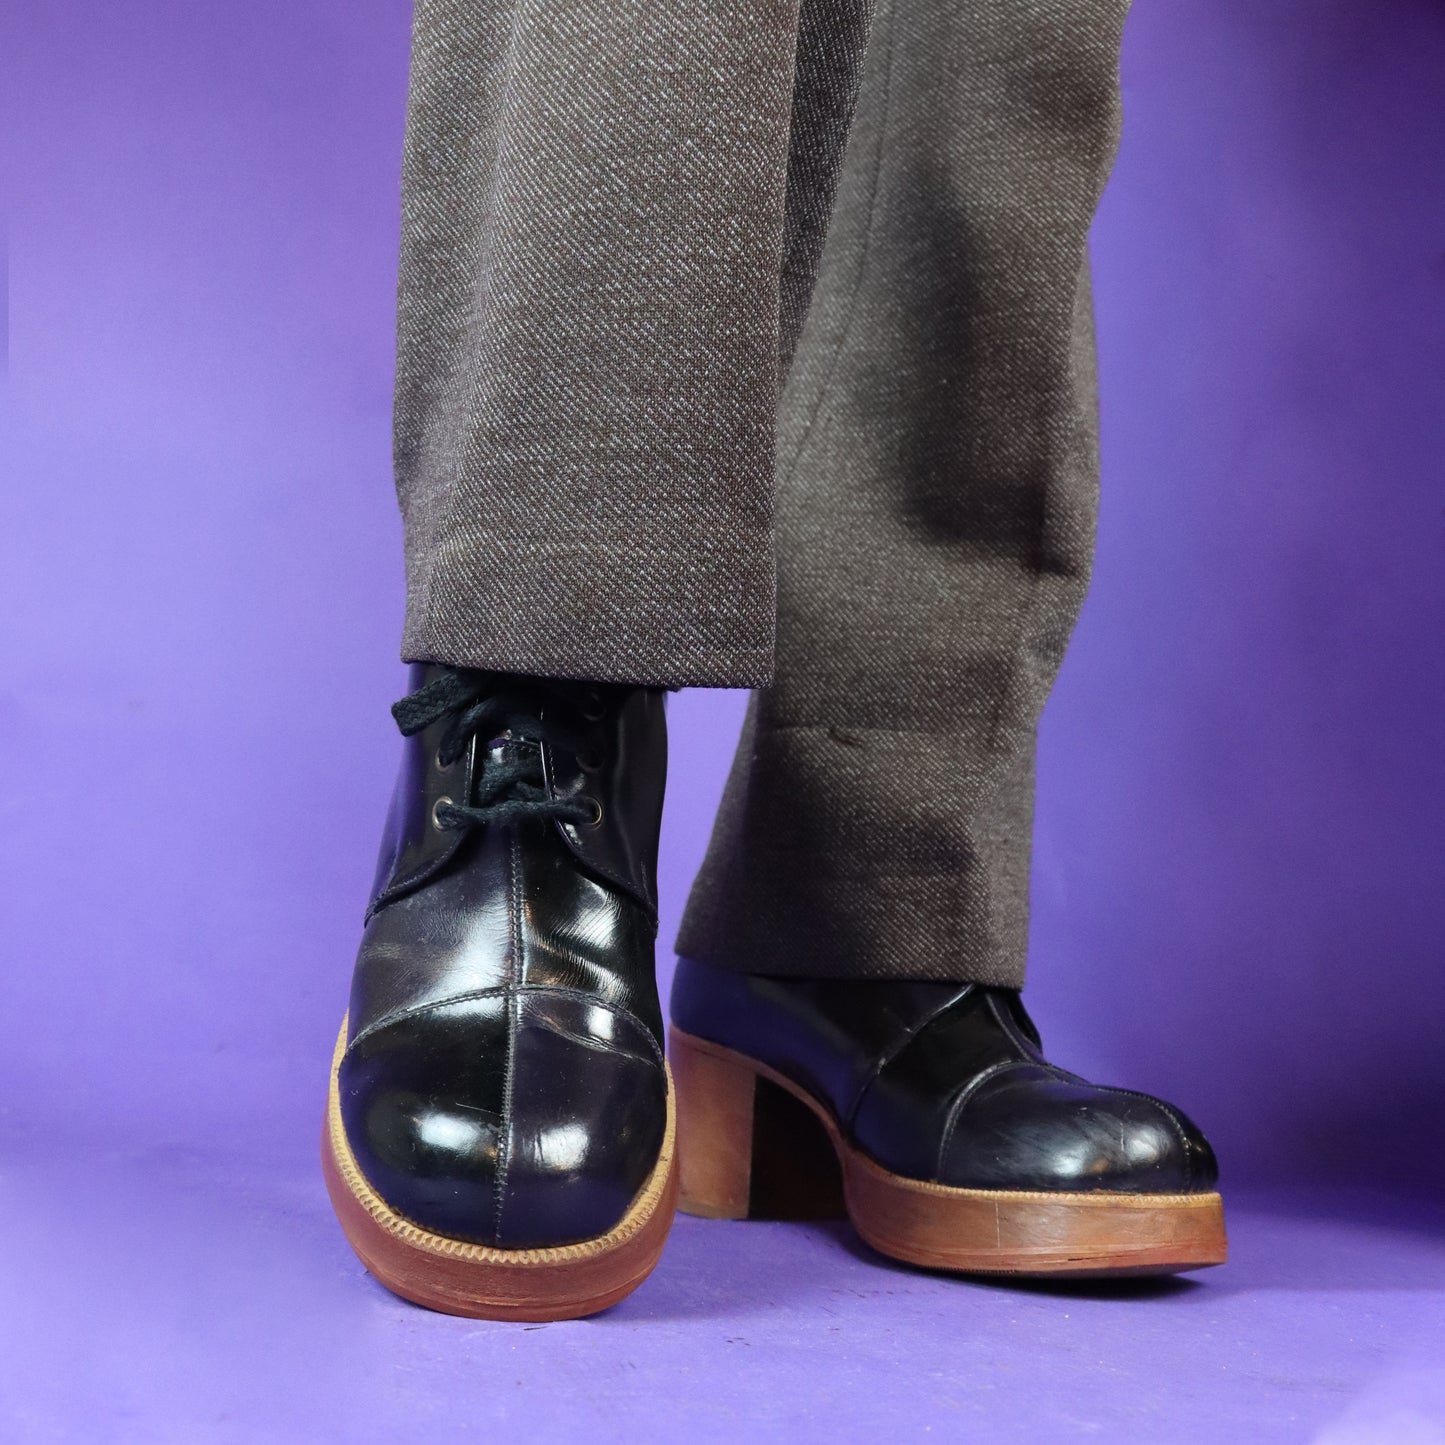 Vintage 1970s Two Tone Purple and Black Patent Leather Platform Shoes